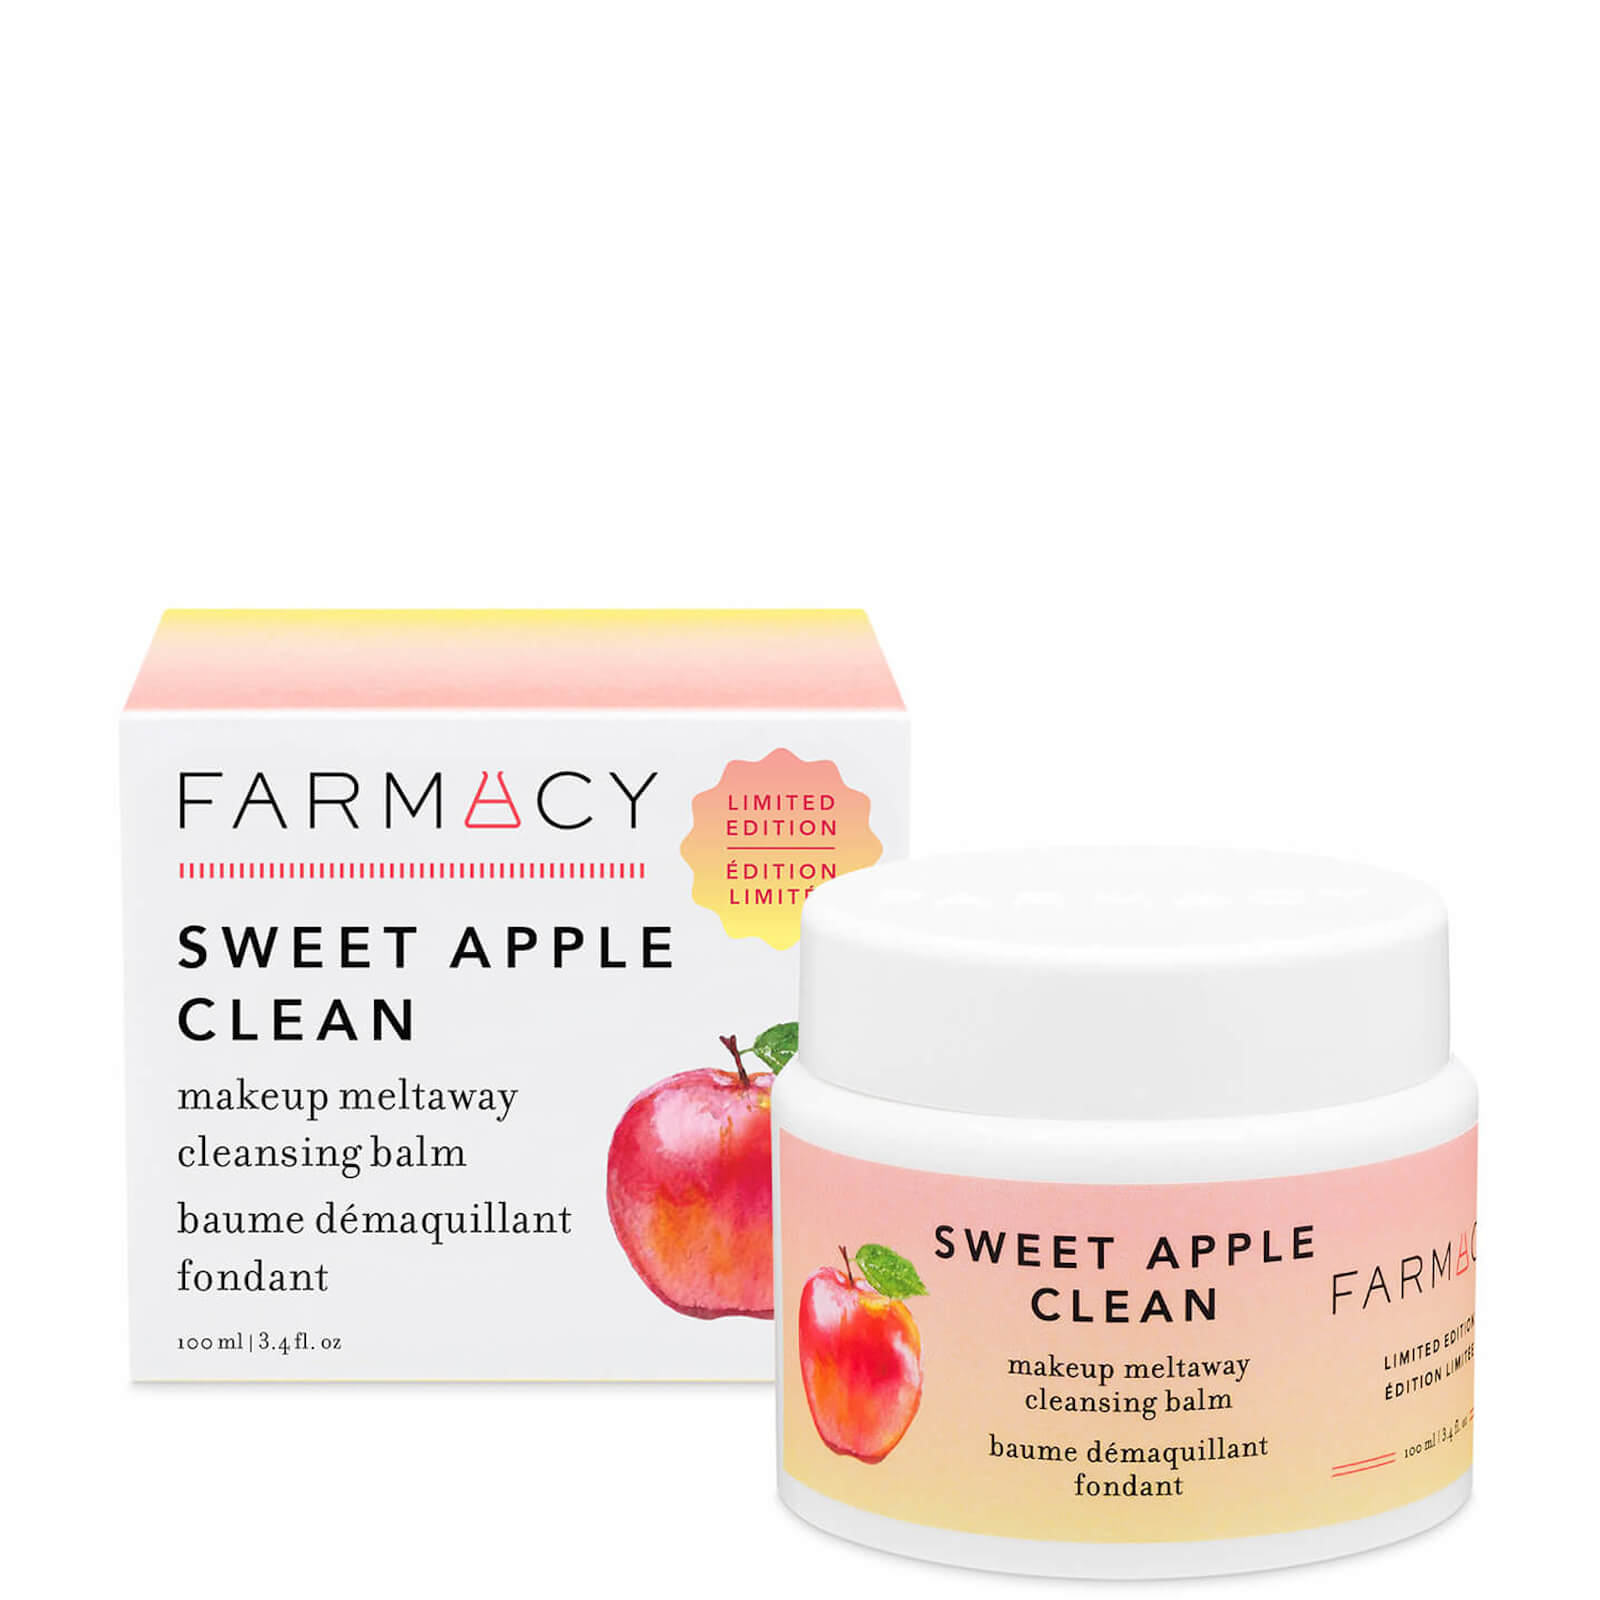 farmacy sweet apple clean makeup meltaway cleansing balm